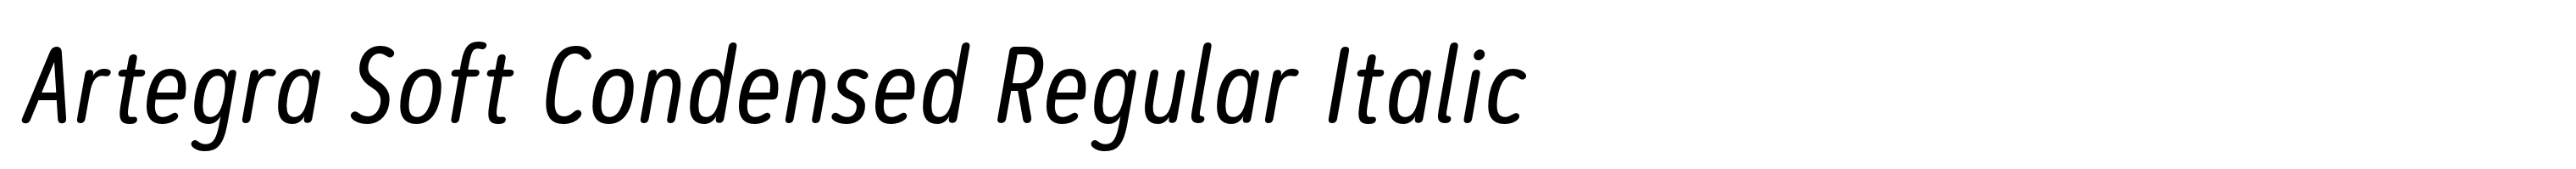 Artegra Soft Condensed Regular Italic